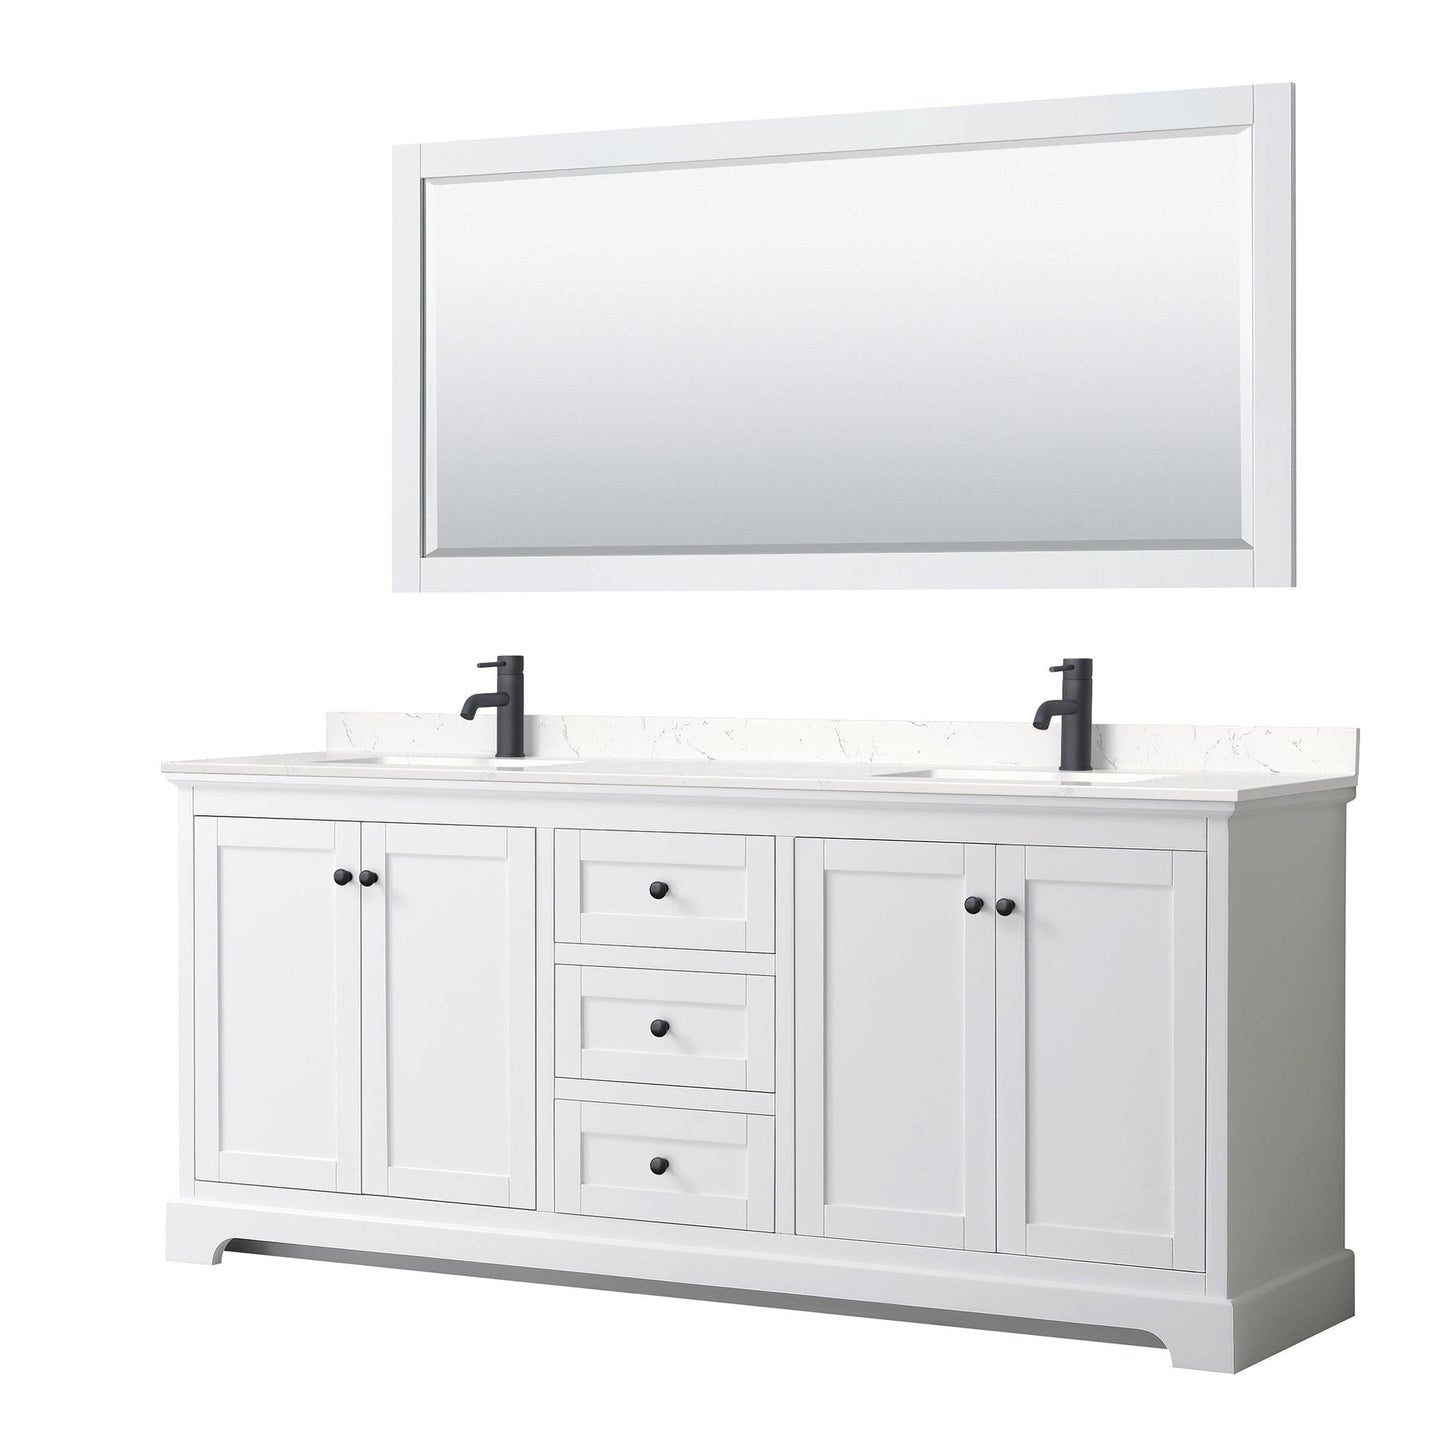 Avery 80" Double Bathroom Vanity in White, Carrara Cultured Marble Countertop, Undermount Square Sinks, Matte Black Trim, 70" Mirror